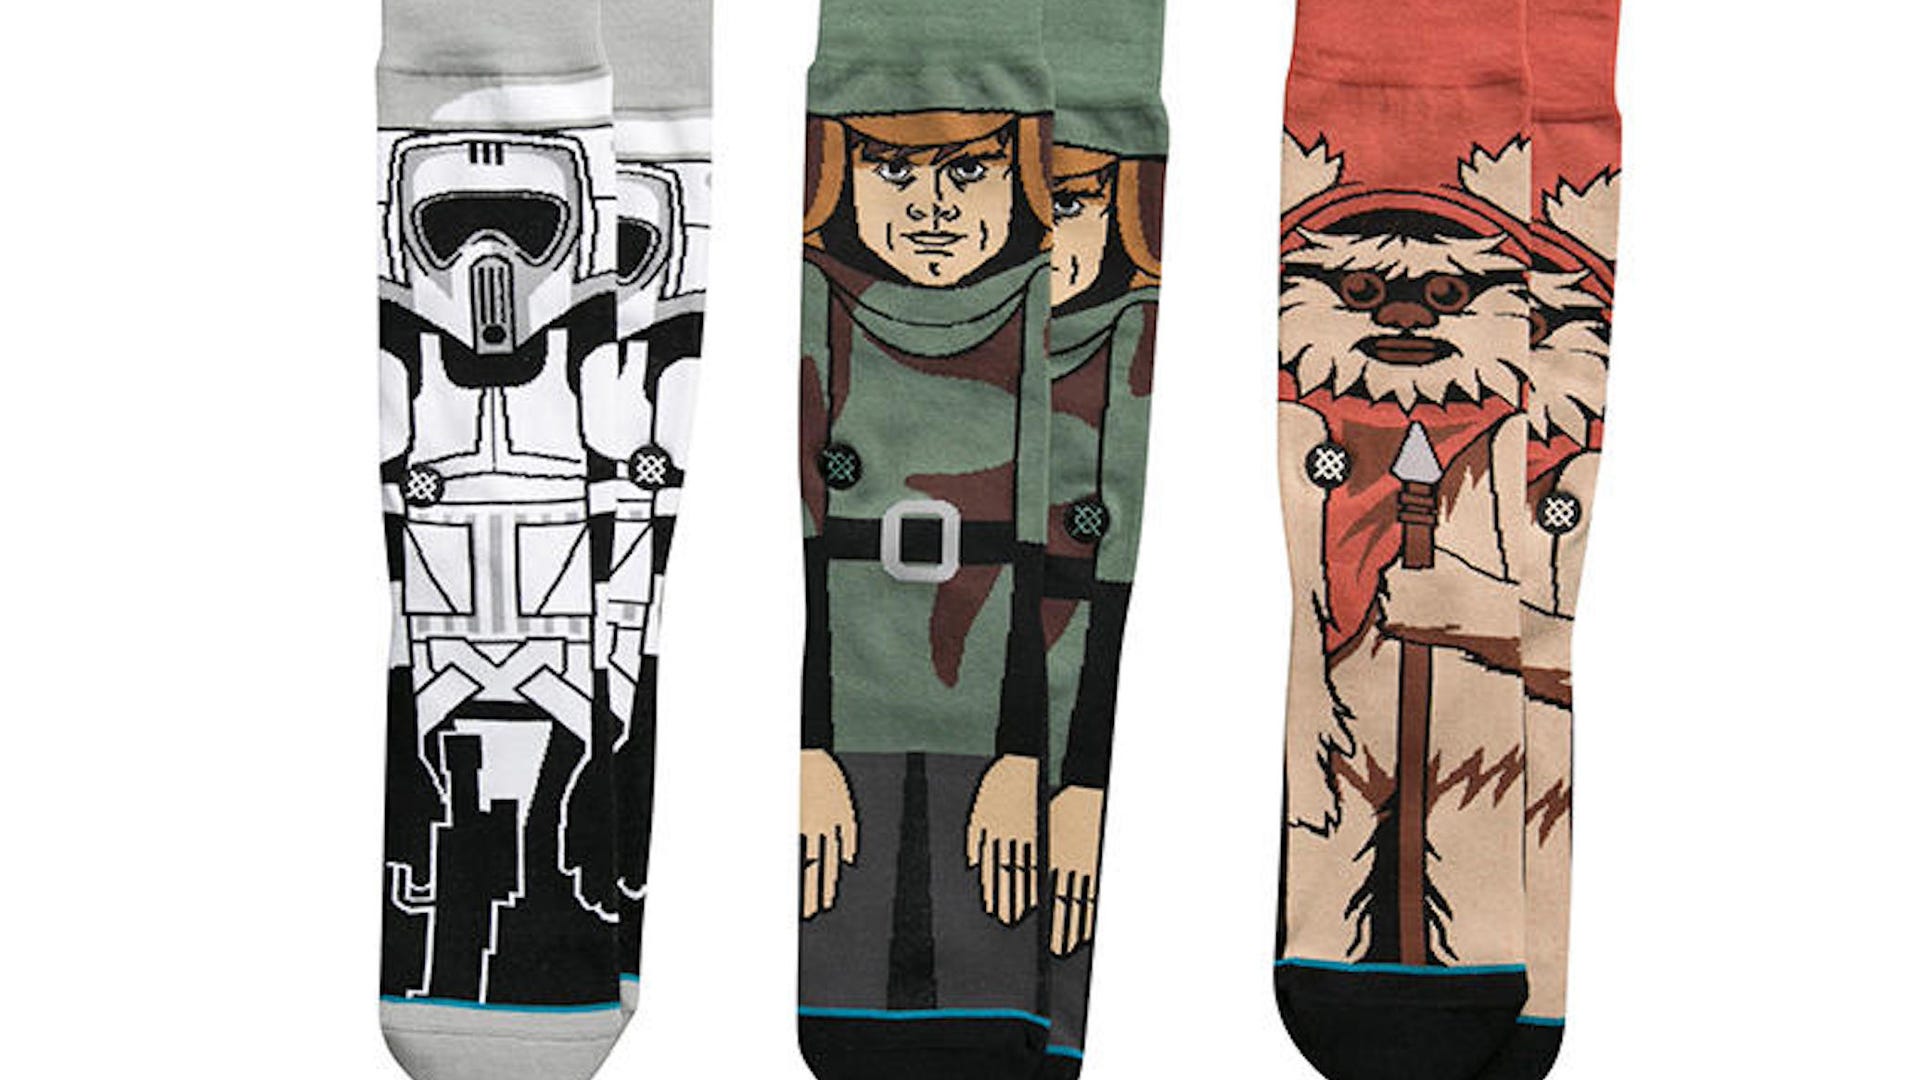 Return of the Jedi socks